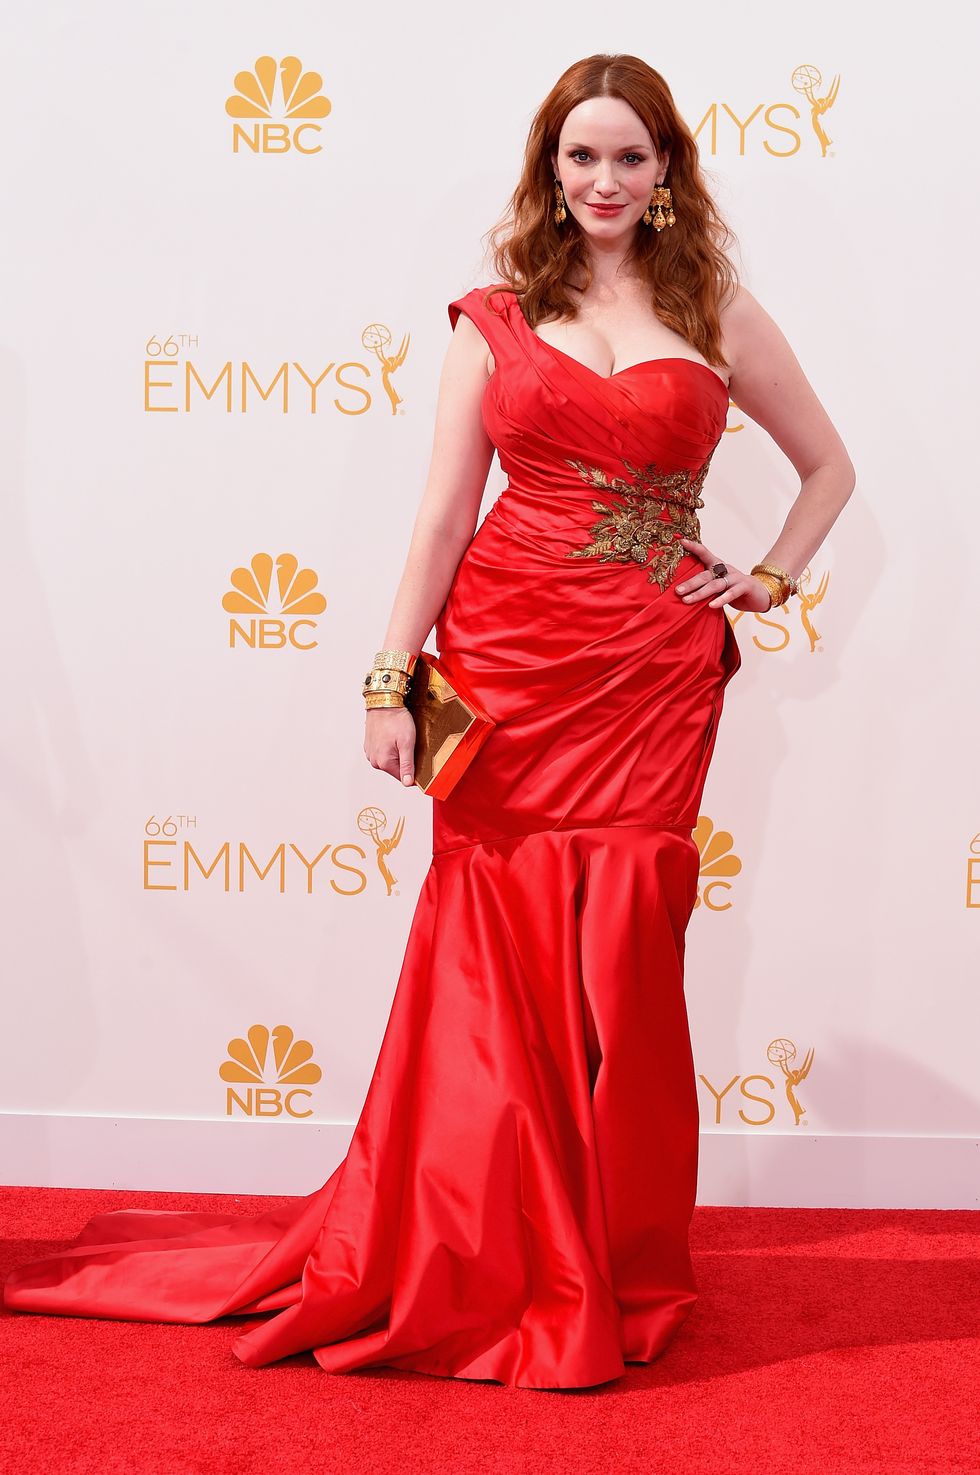 Christina Hendricks looks super sexy at the Emmy Awards 2014